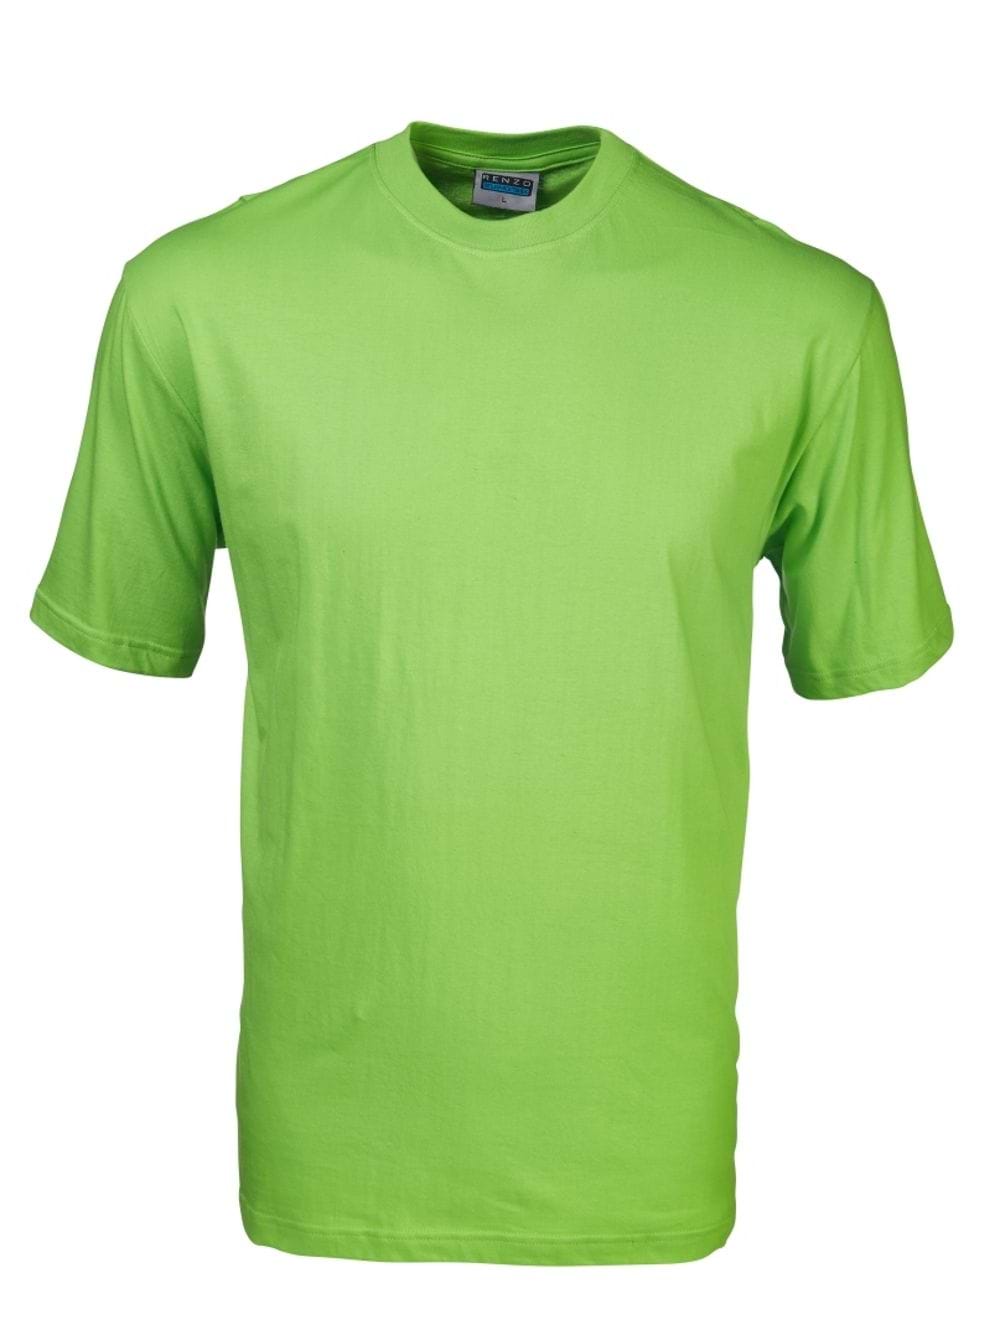 165G Crew Neck T-Shirt - Lime Green / L